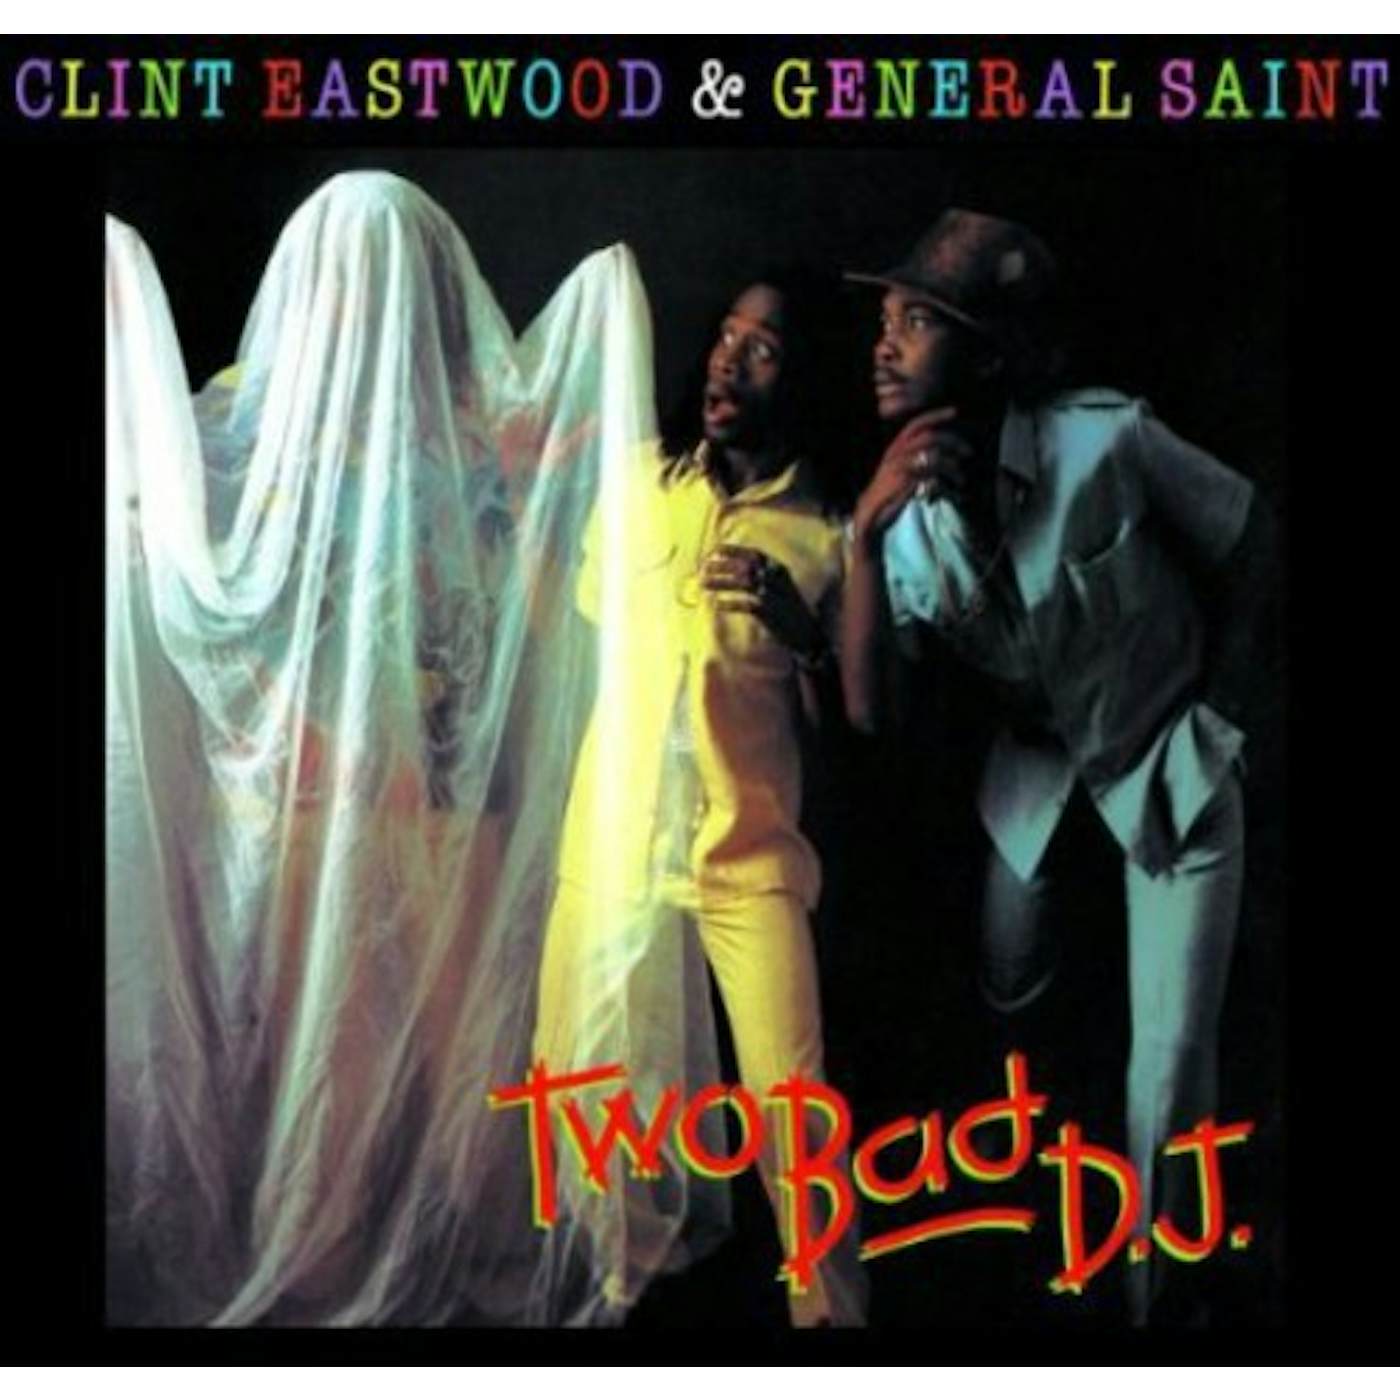 Clint Eastwood & General Saint Two Bad D.J. Vinyl Record